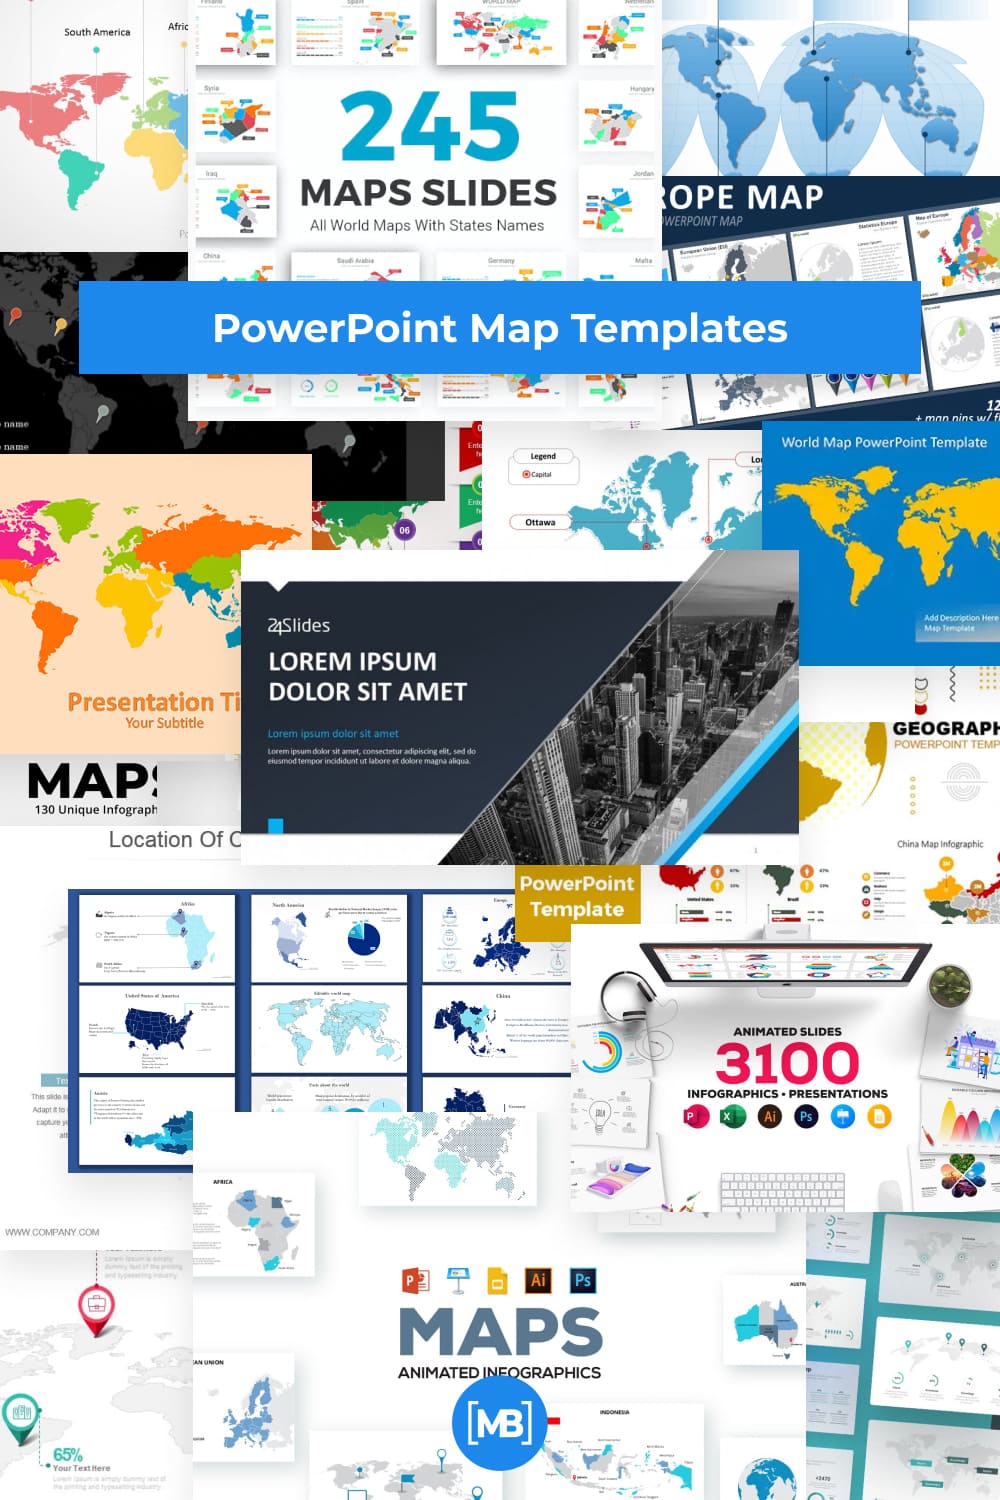 PowerPoint Map Templates Pinterest.